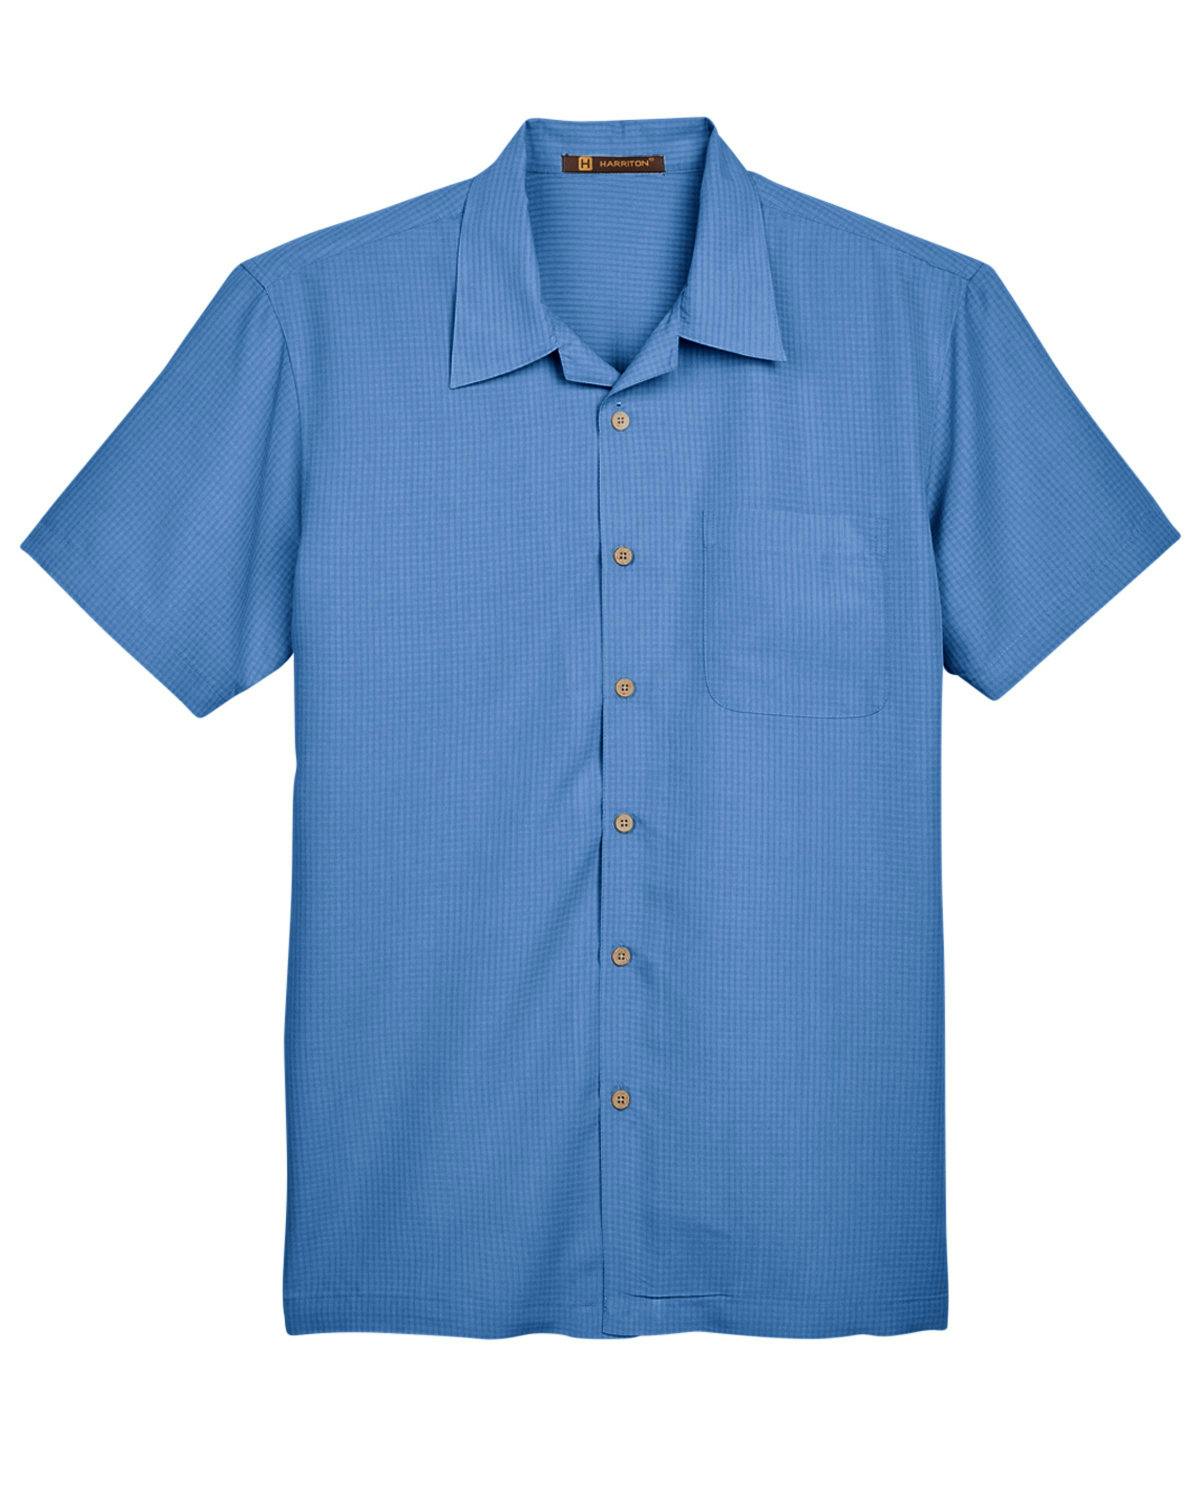 Image for Men's Barbados Textured Camp Shirt